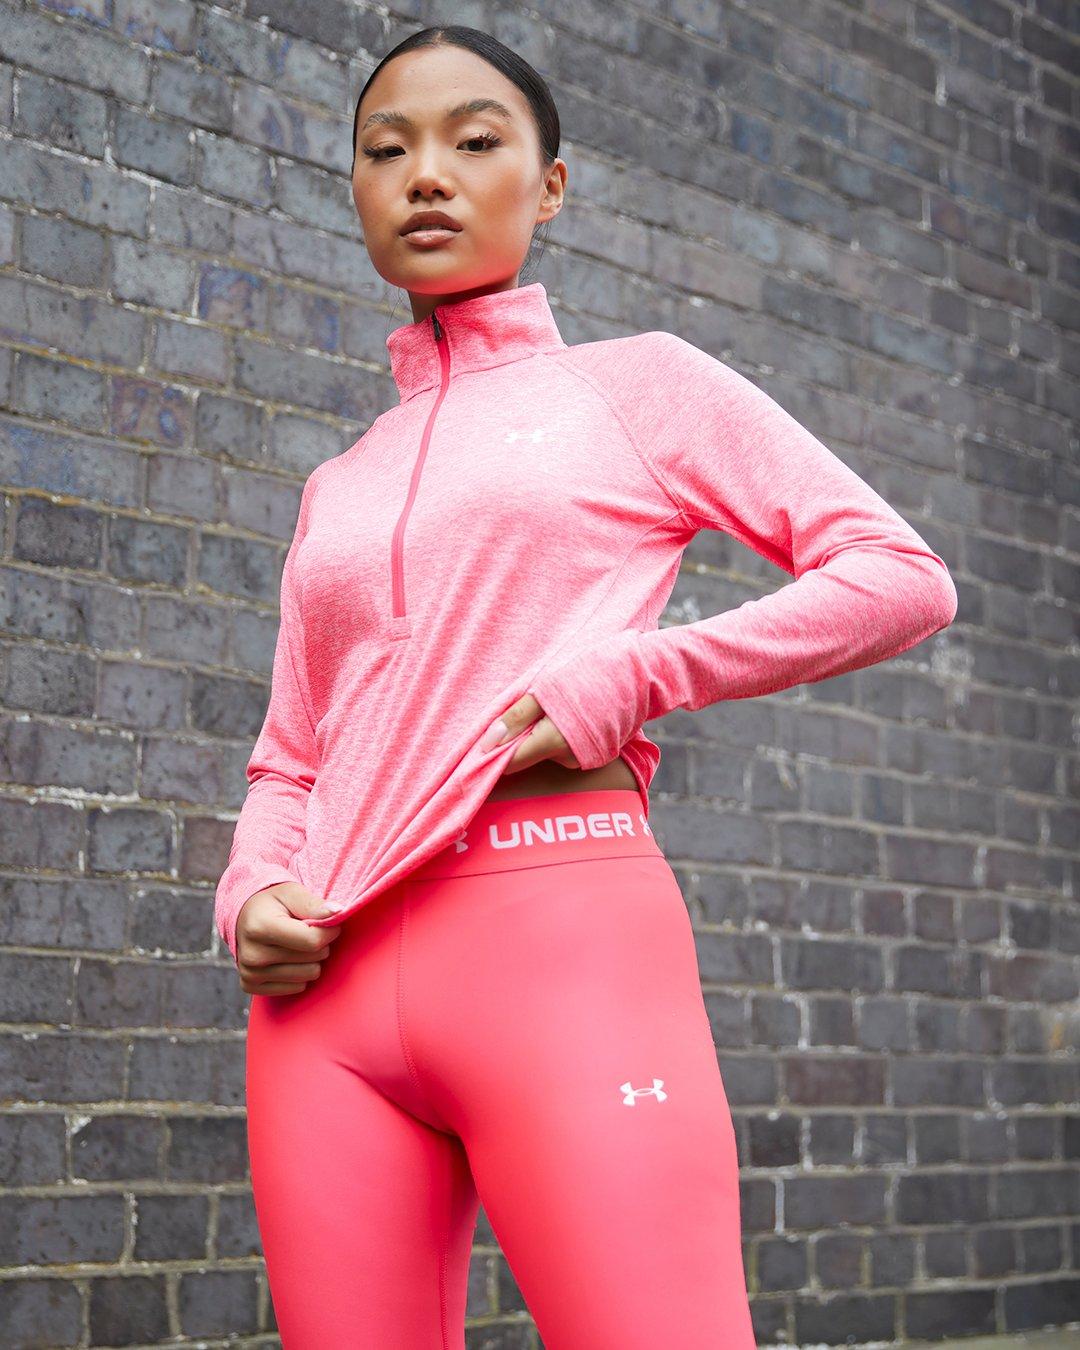 Frau in rosa Sport-Outfit von Under Armour